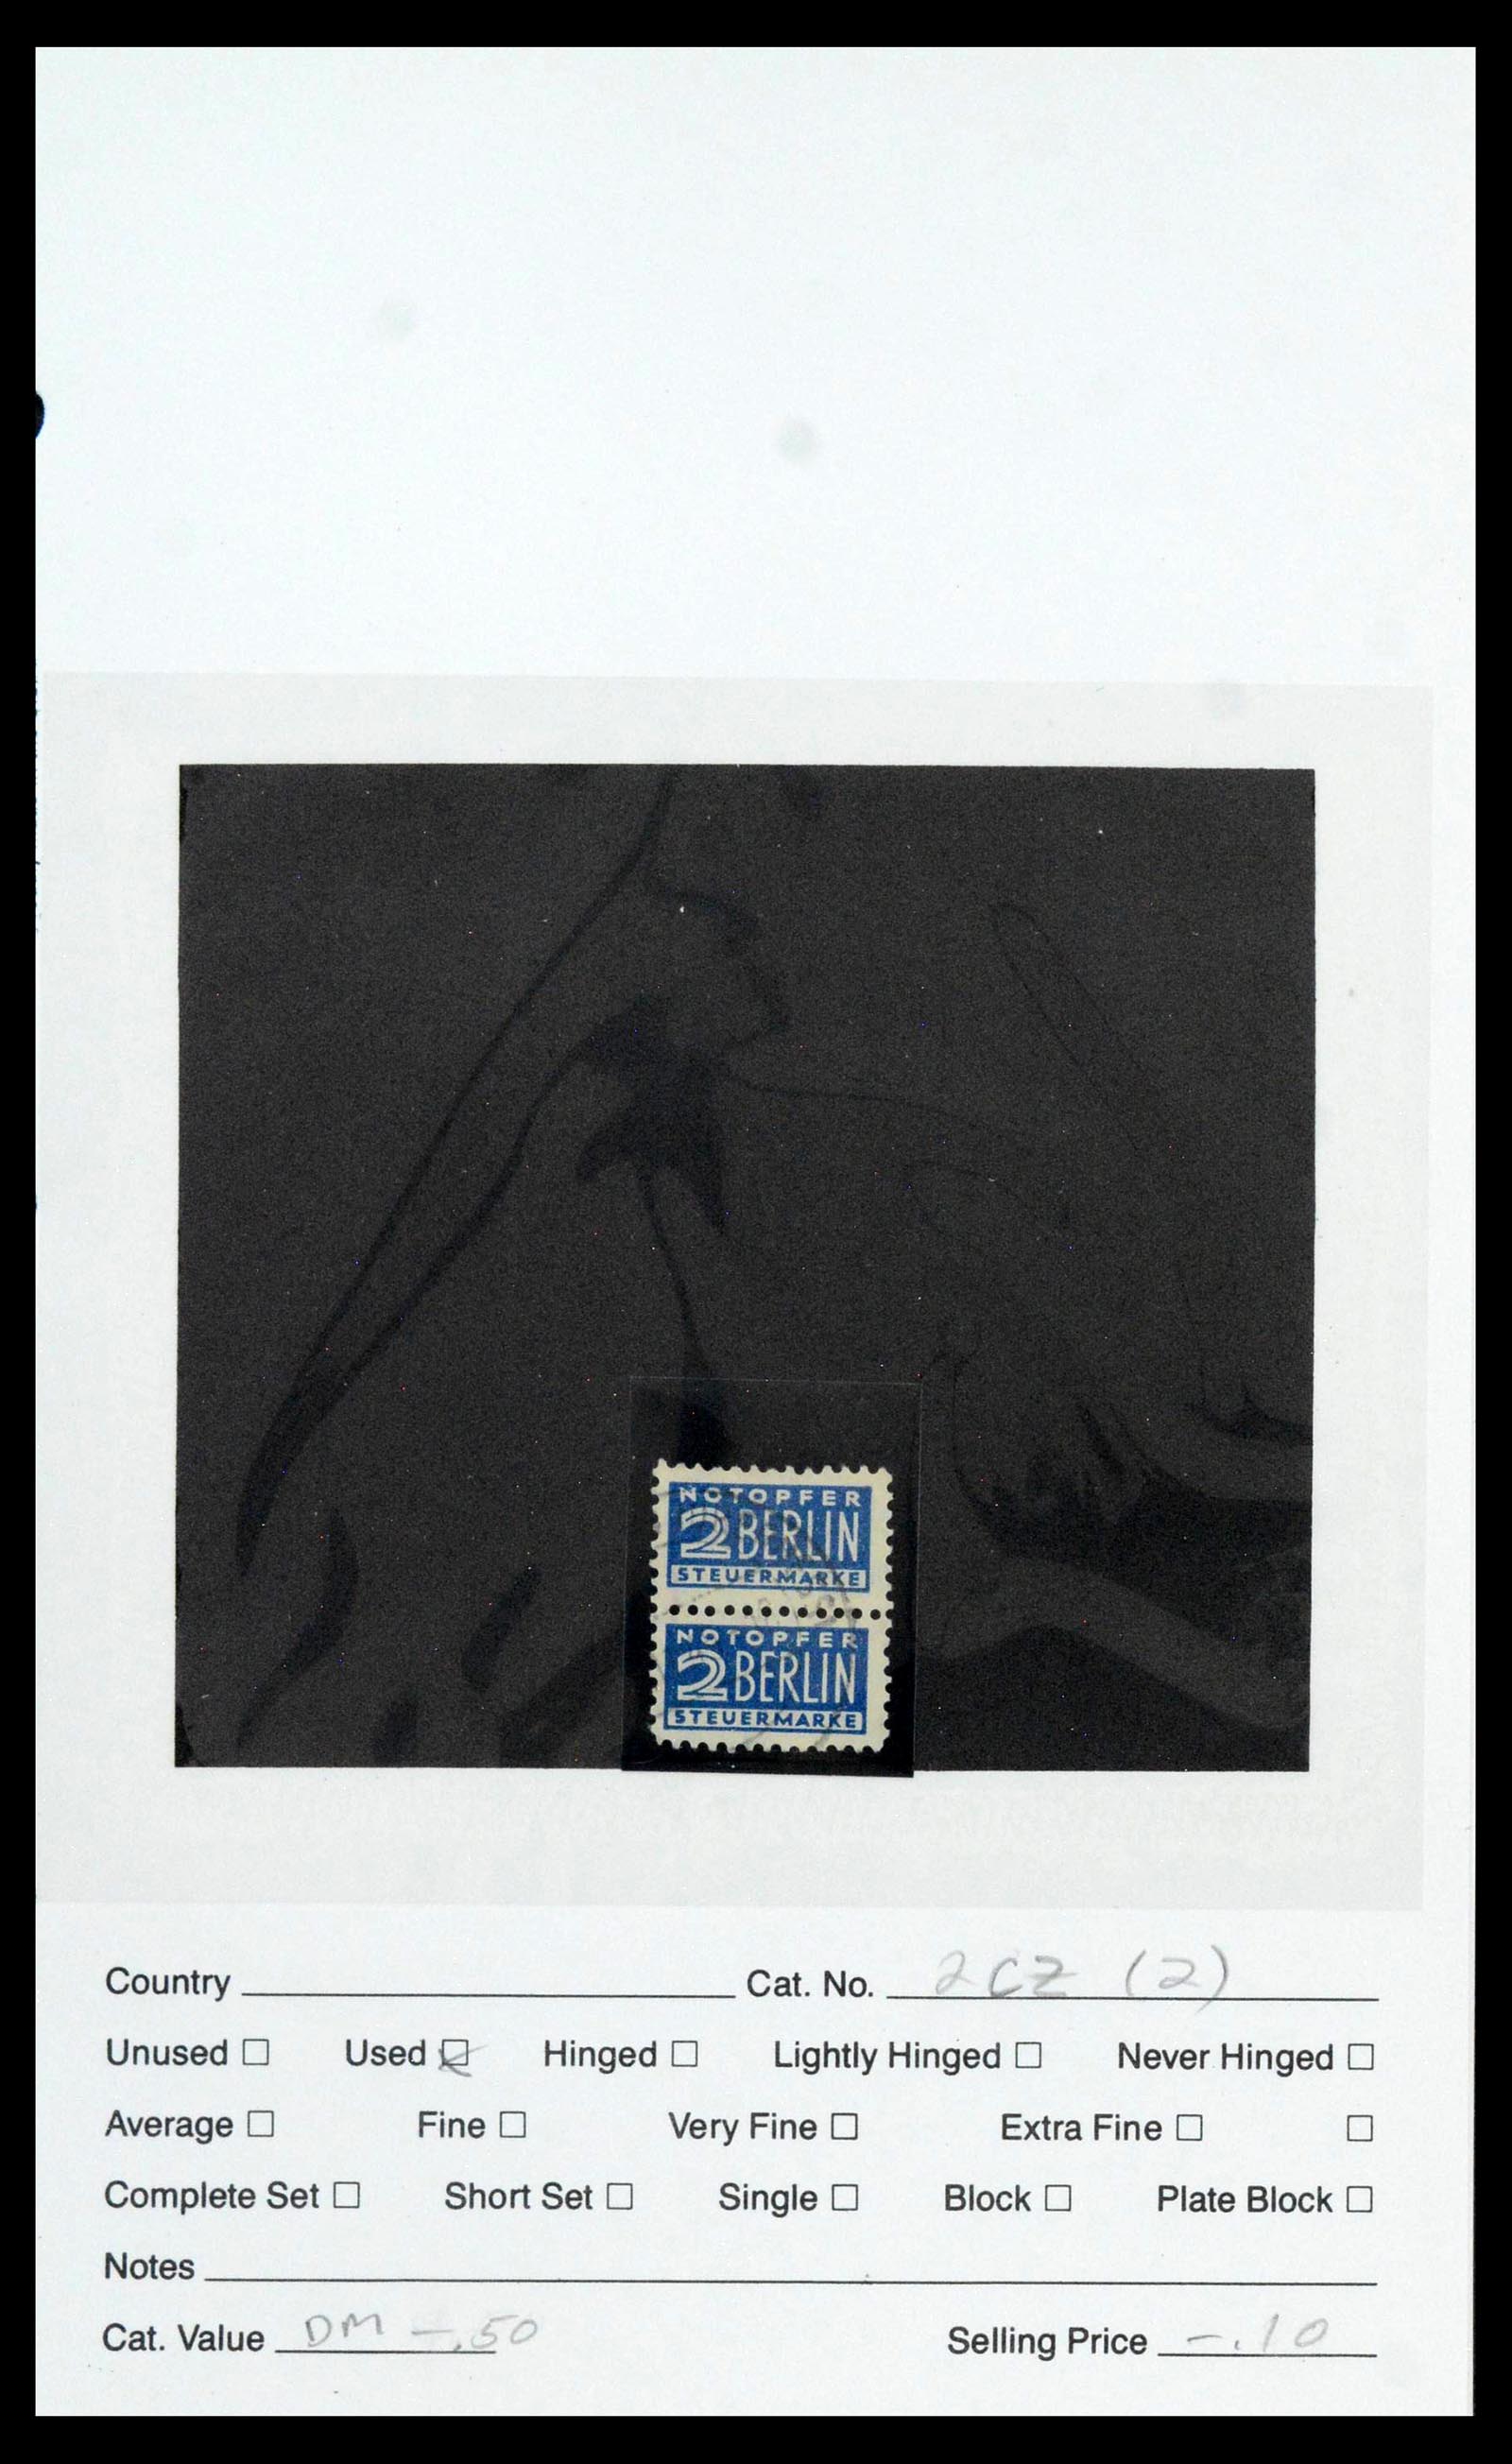 39459 0020 - Stamp collection 39459 Berlin notopfer 1948-1949.